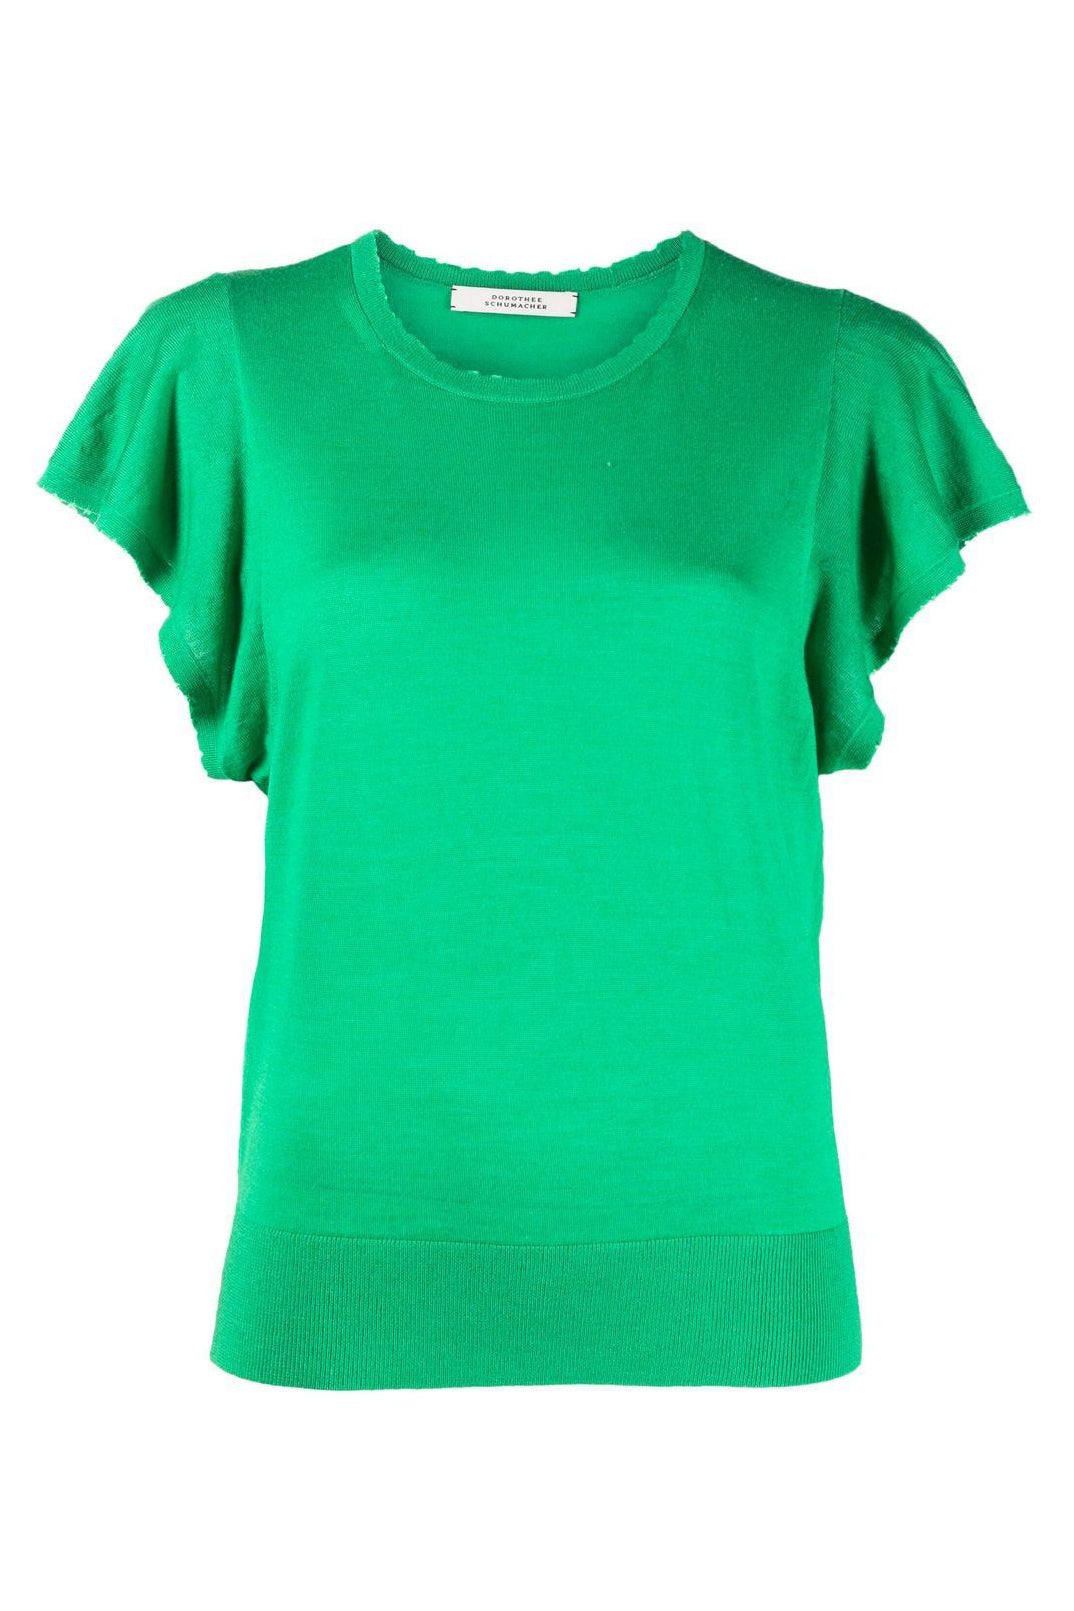 Frayed-edge sleeve top, green